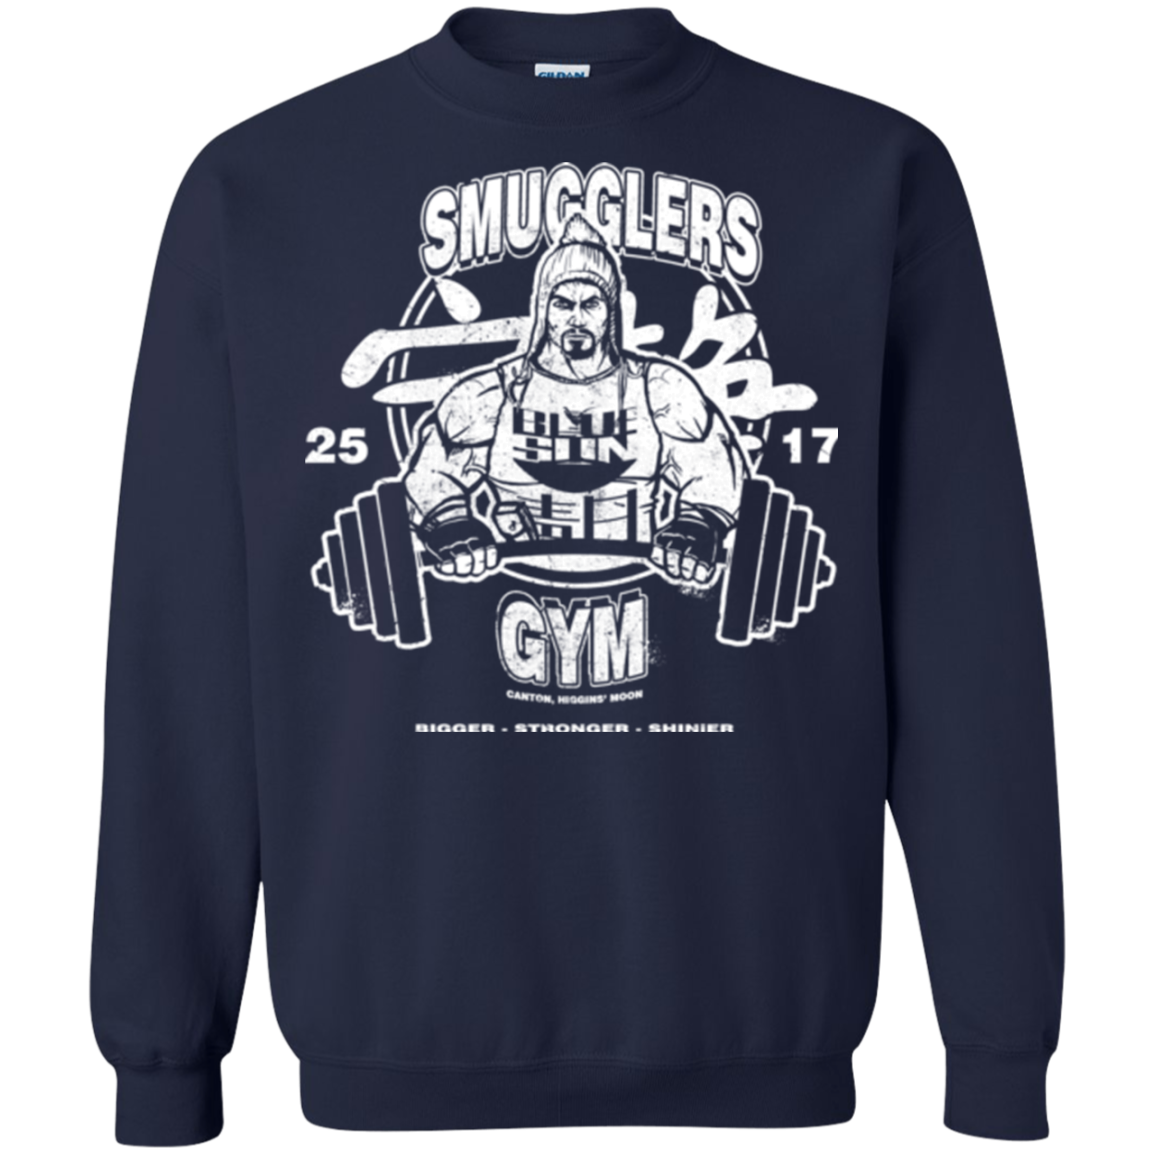 Smugglers Gym Crewneck Sweatshirt